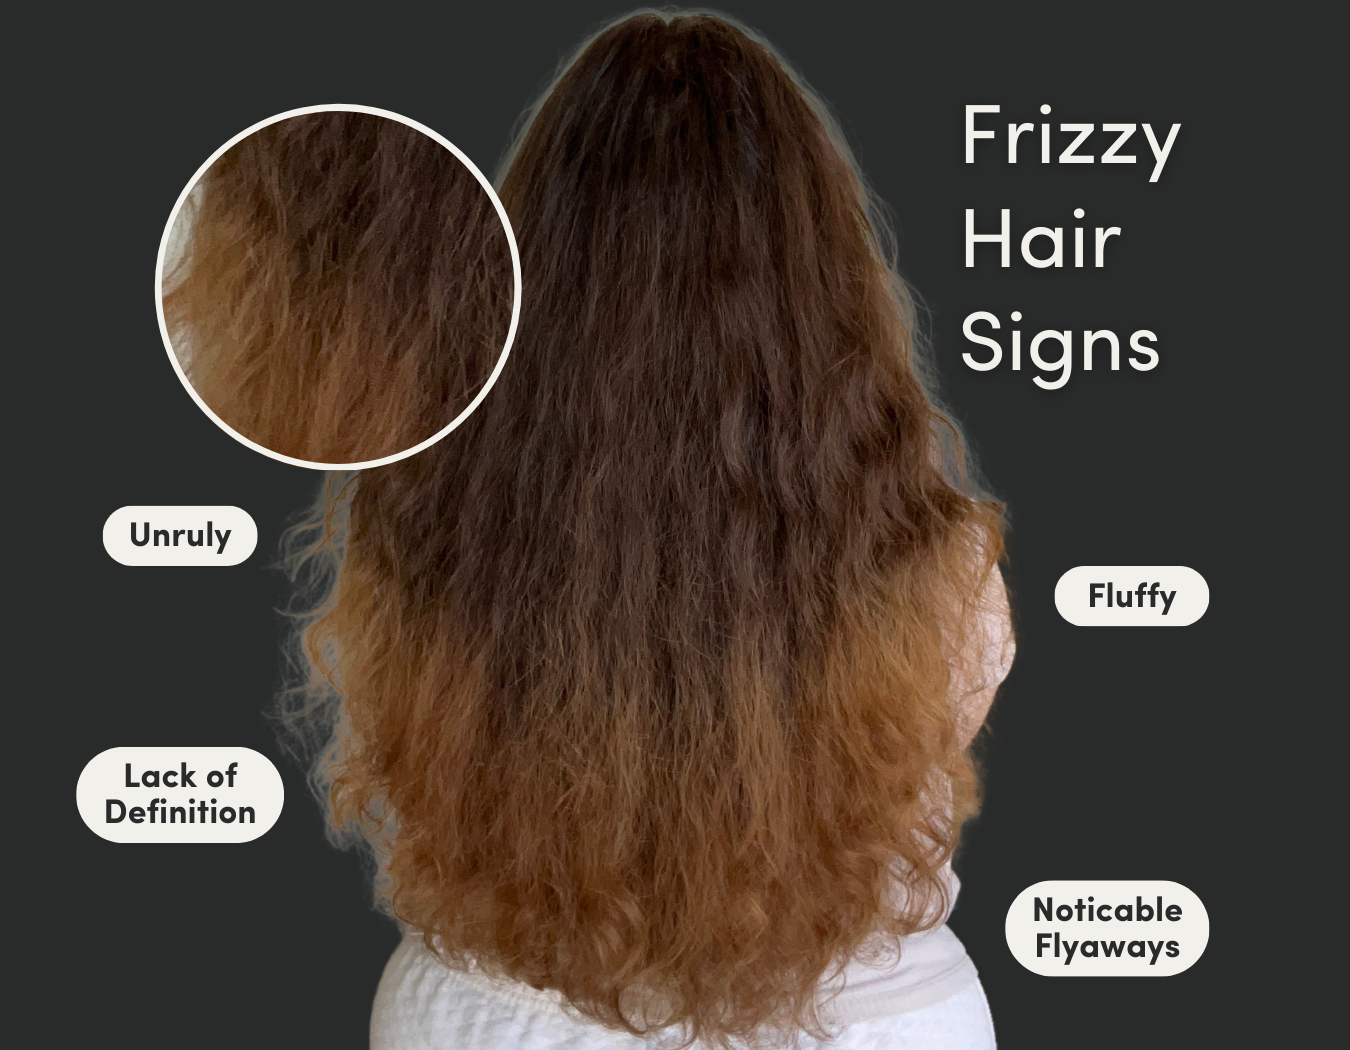 Frizzy hair symptoms